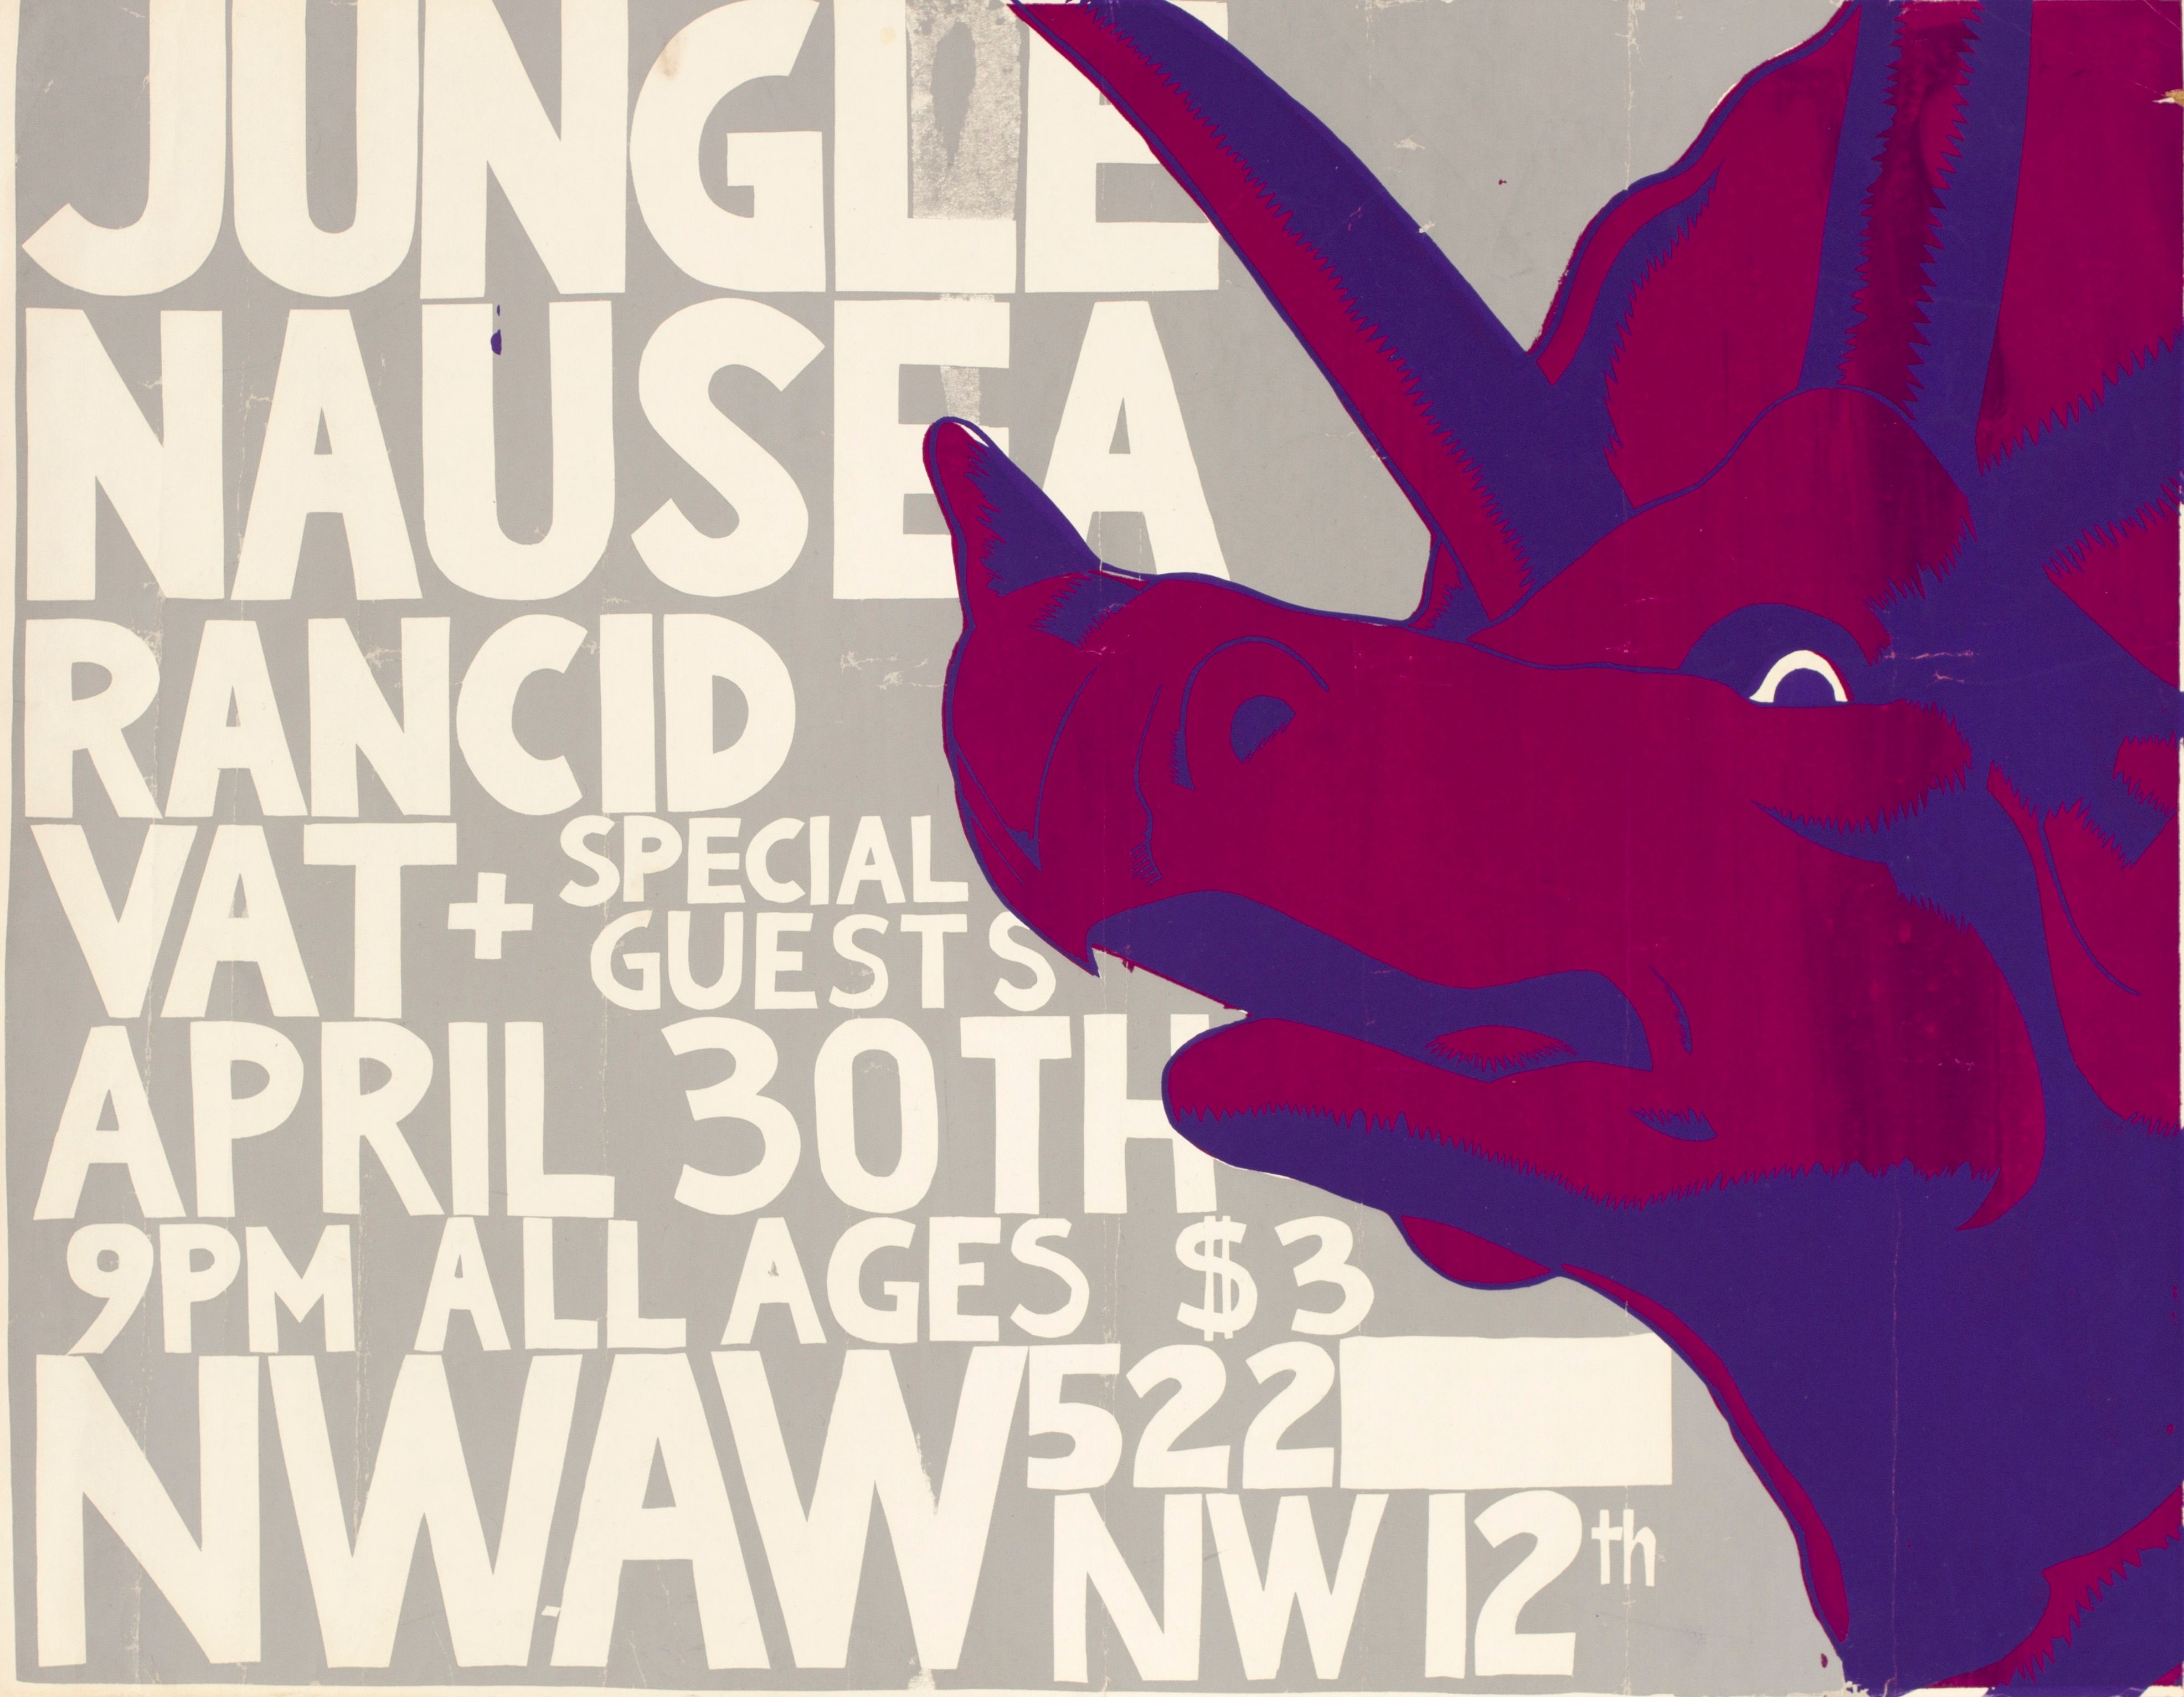 MXP-57.2 Jungle Nausea 1982 Nwaw  Apr 30 Concert Poster